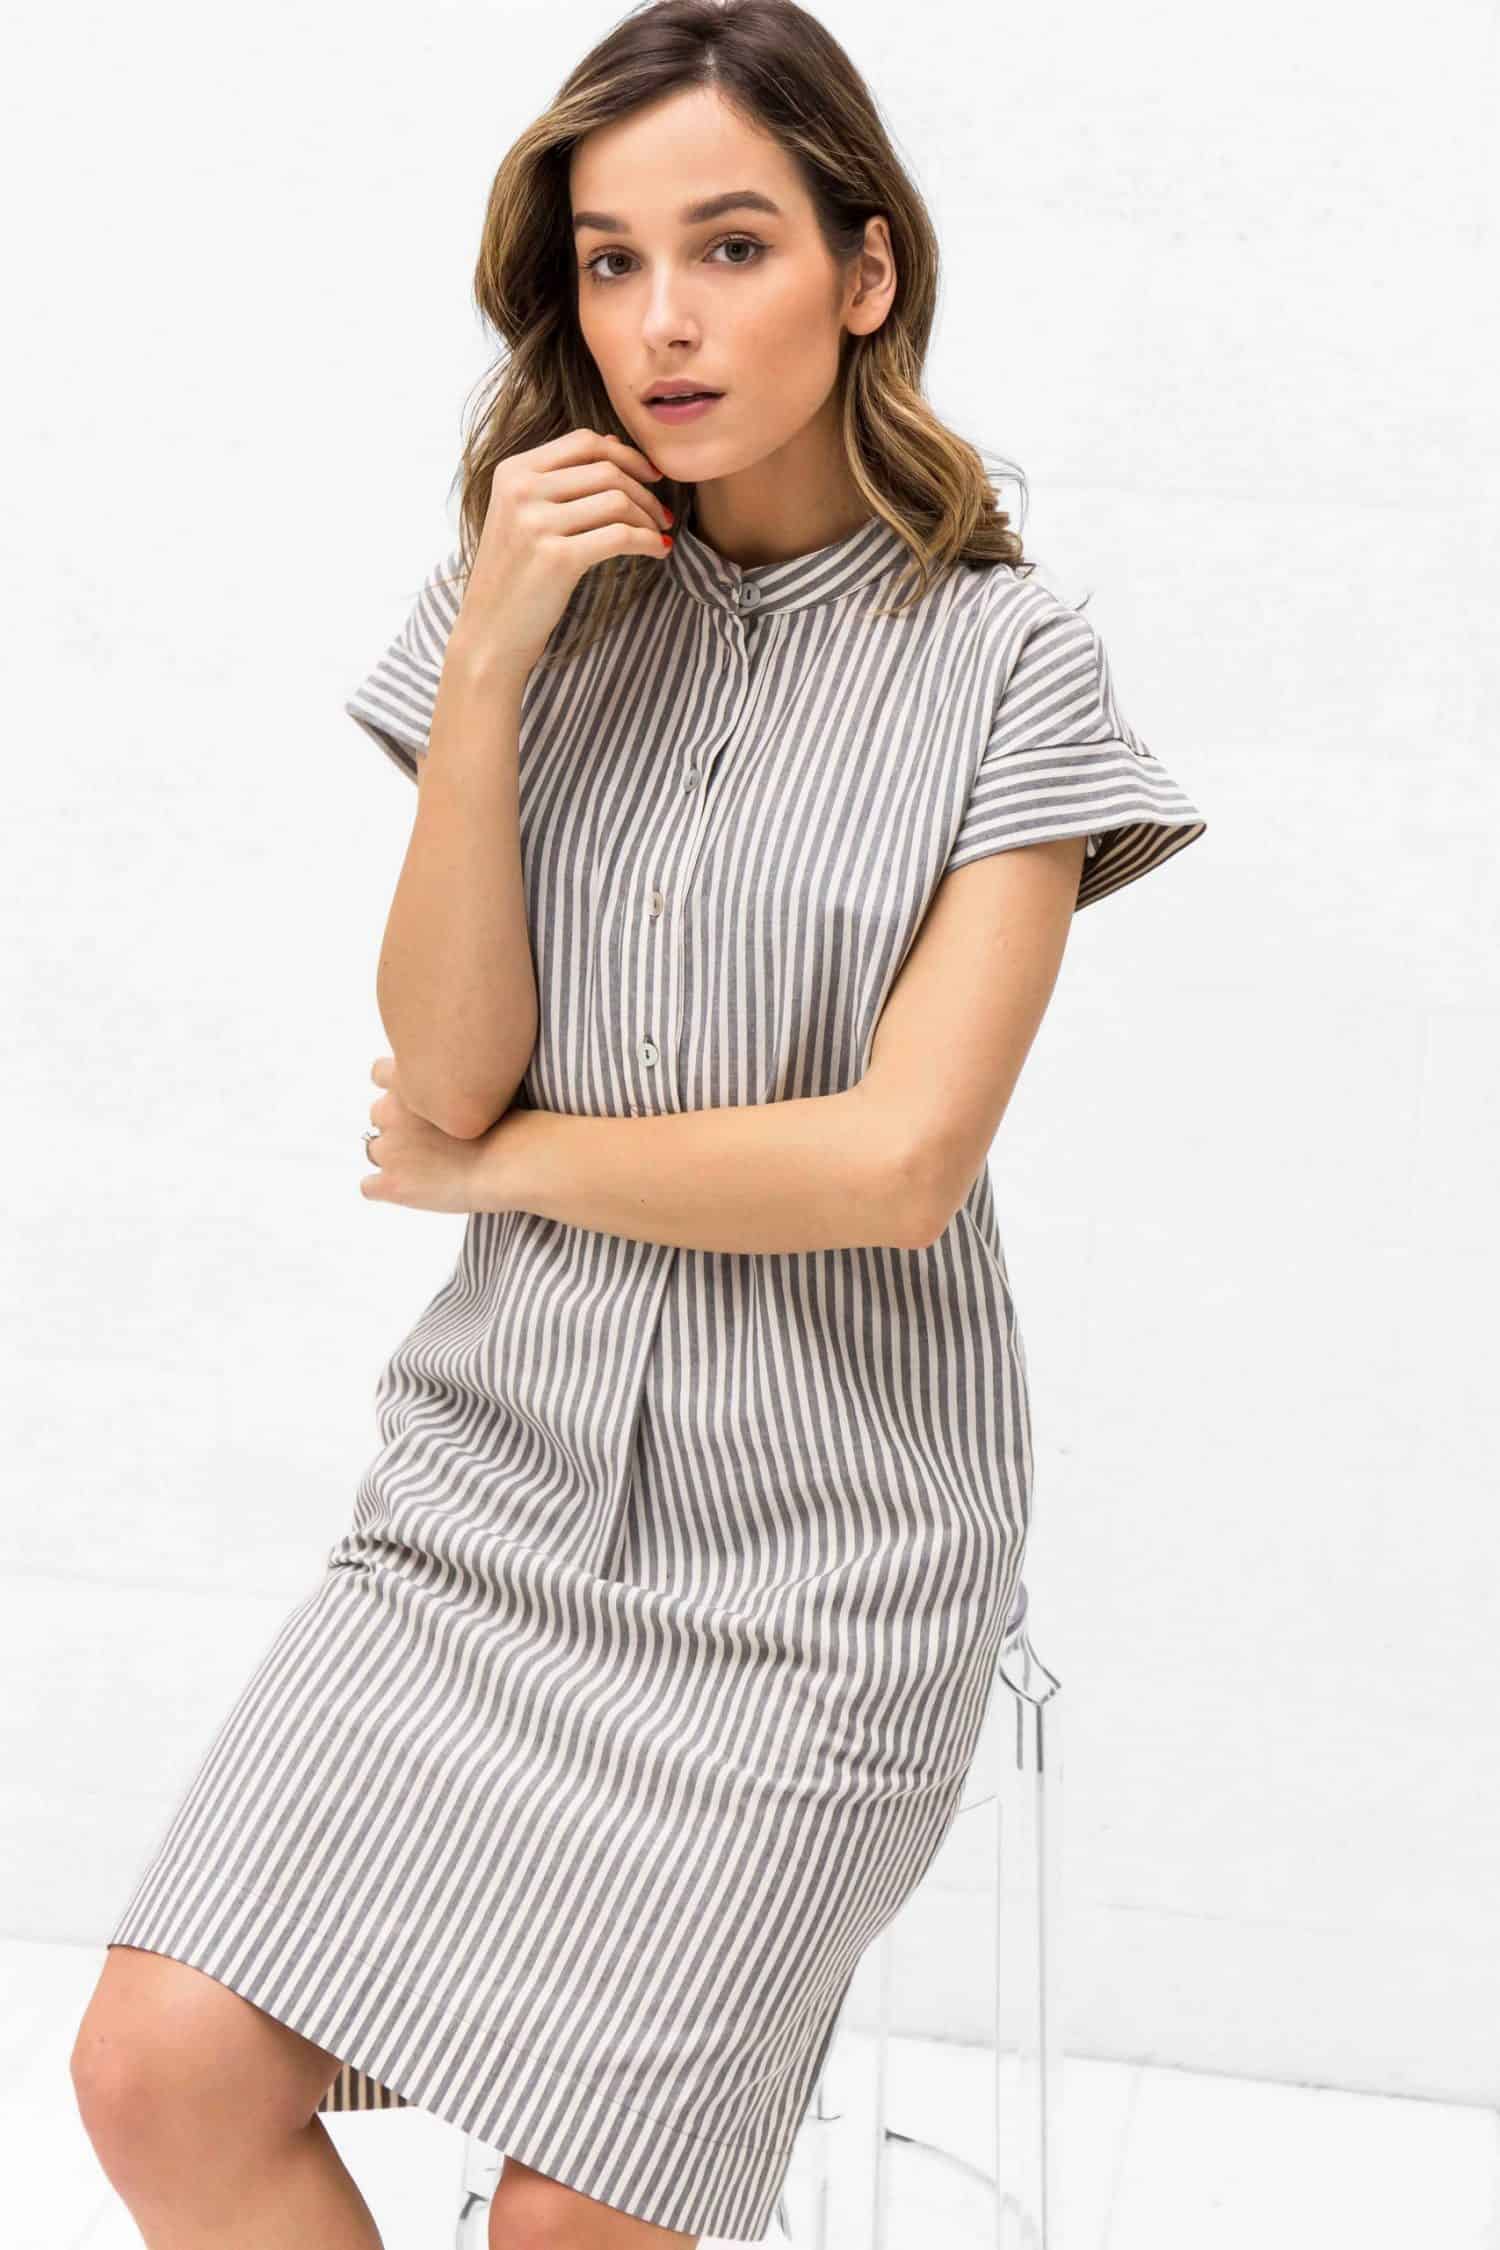 Grey Striped Dress Tori